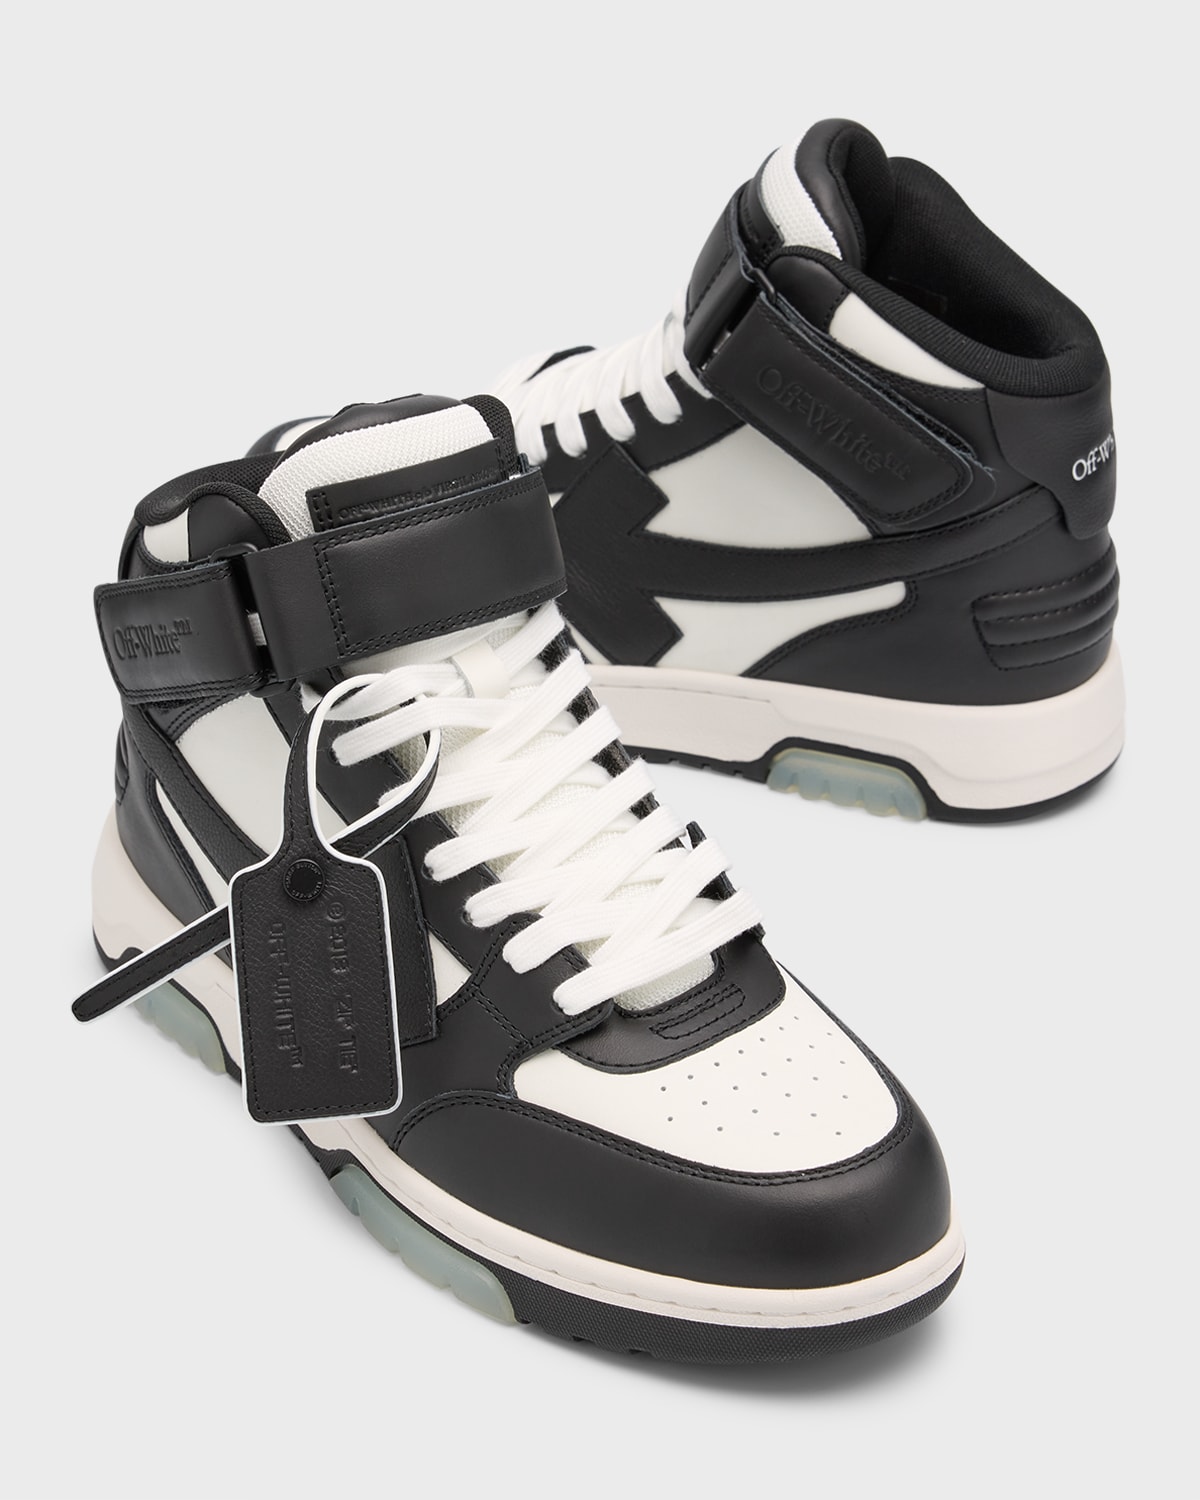 Men's Designer Sneakers - Luxury Trainers, Tennis Shoes